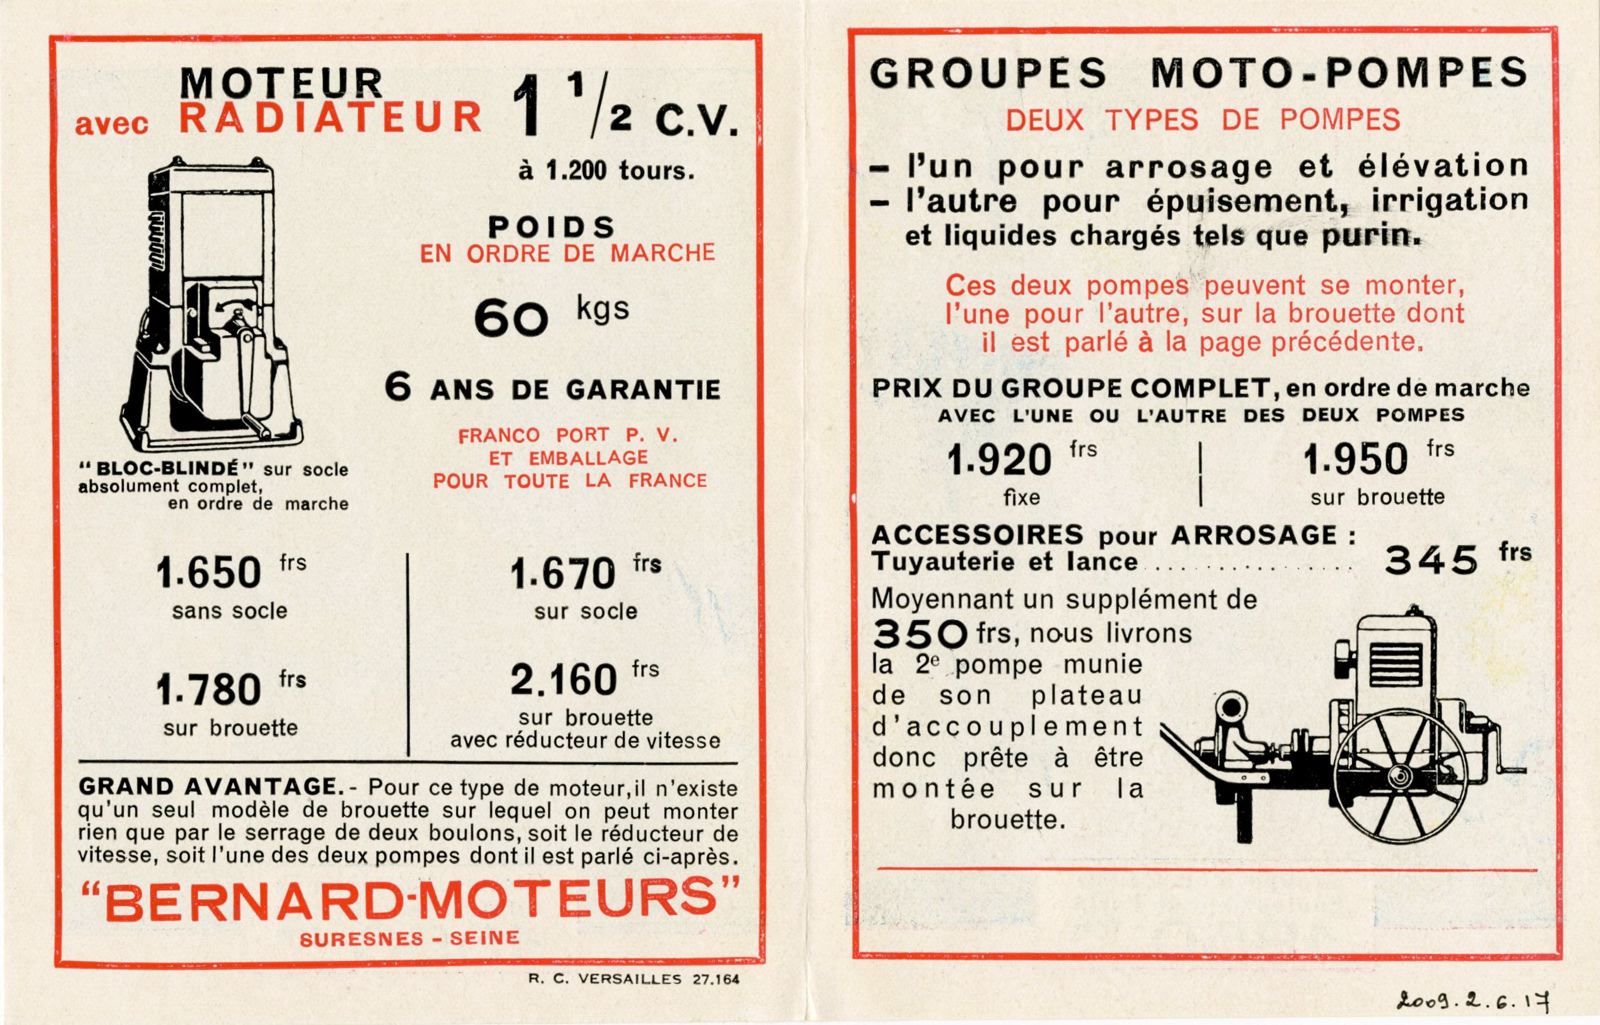 Bernard-Moteurs - Groupe Moto-Pompe